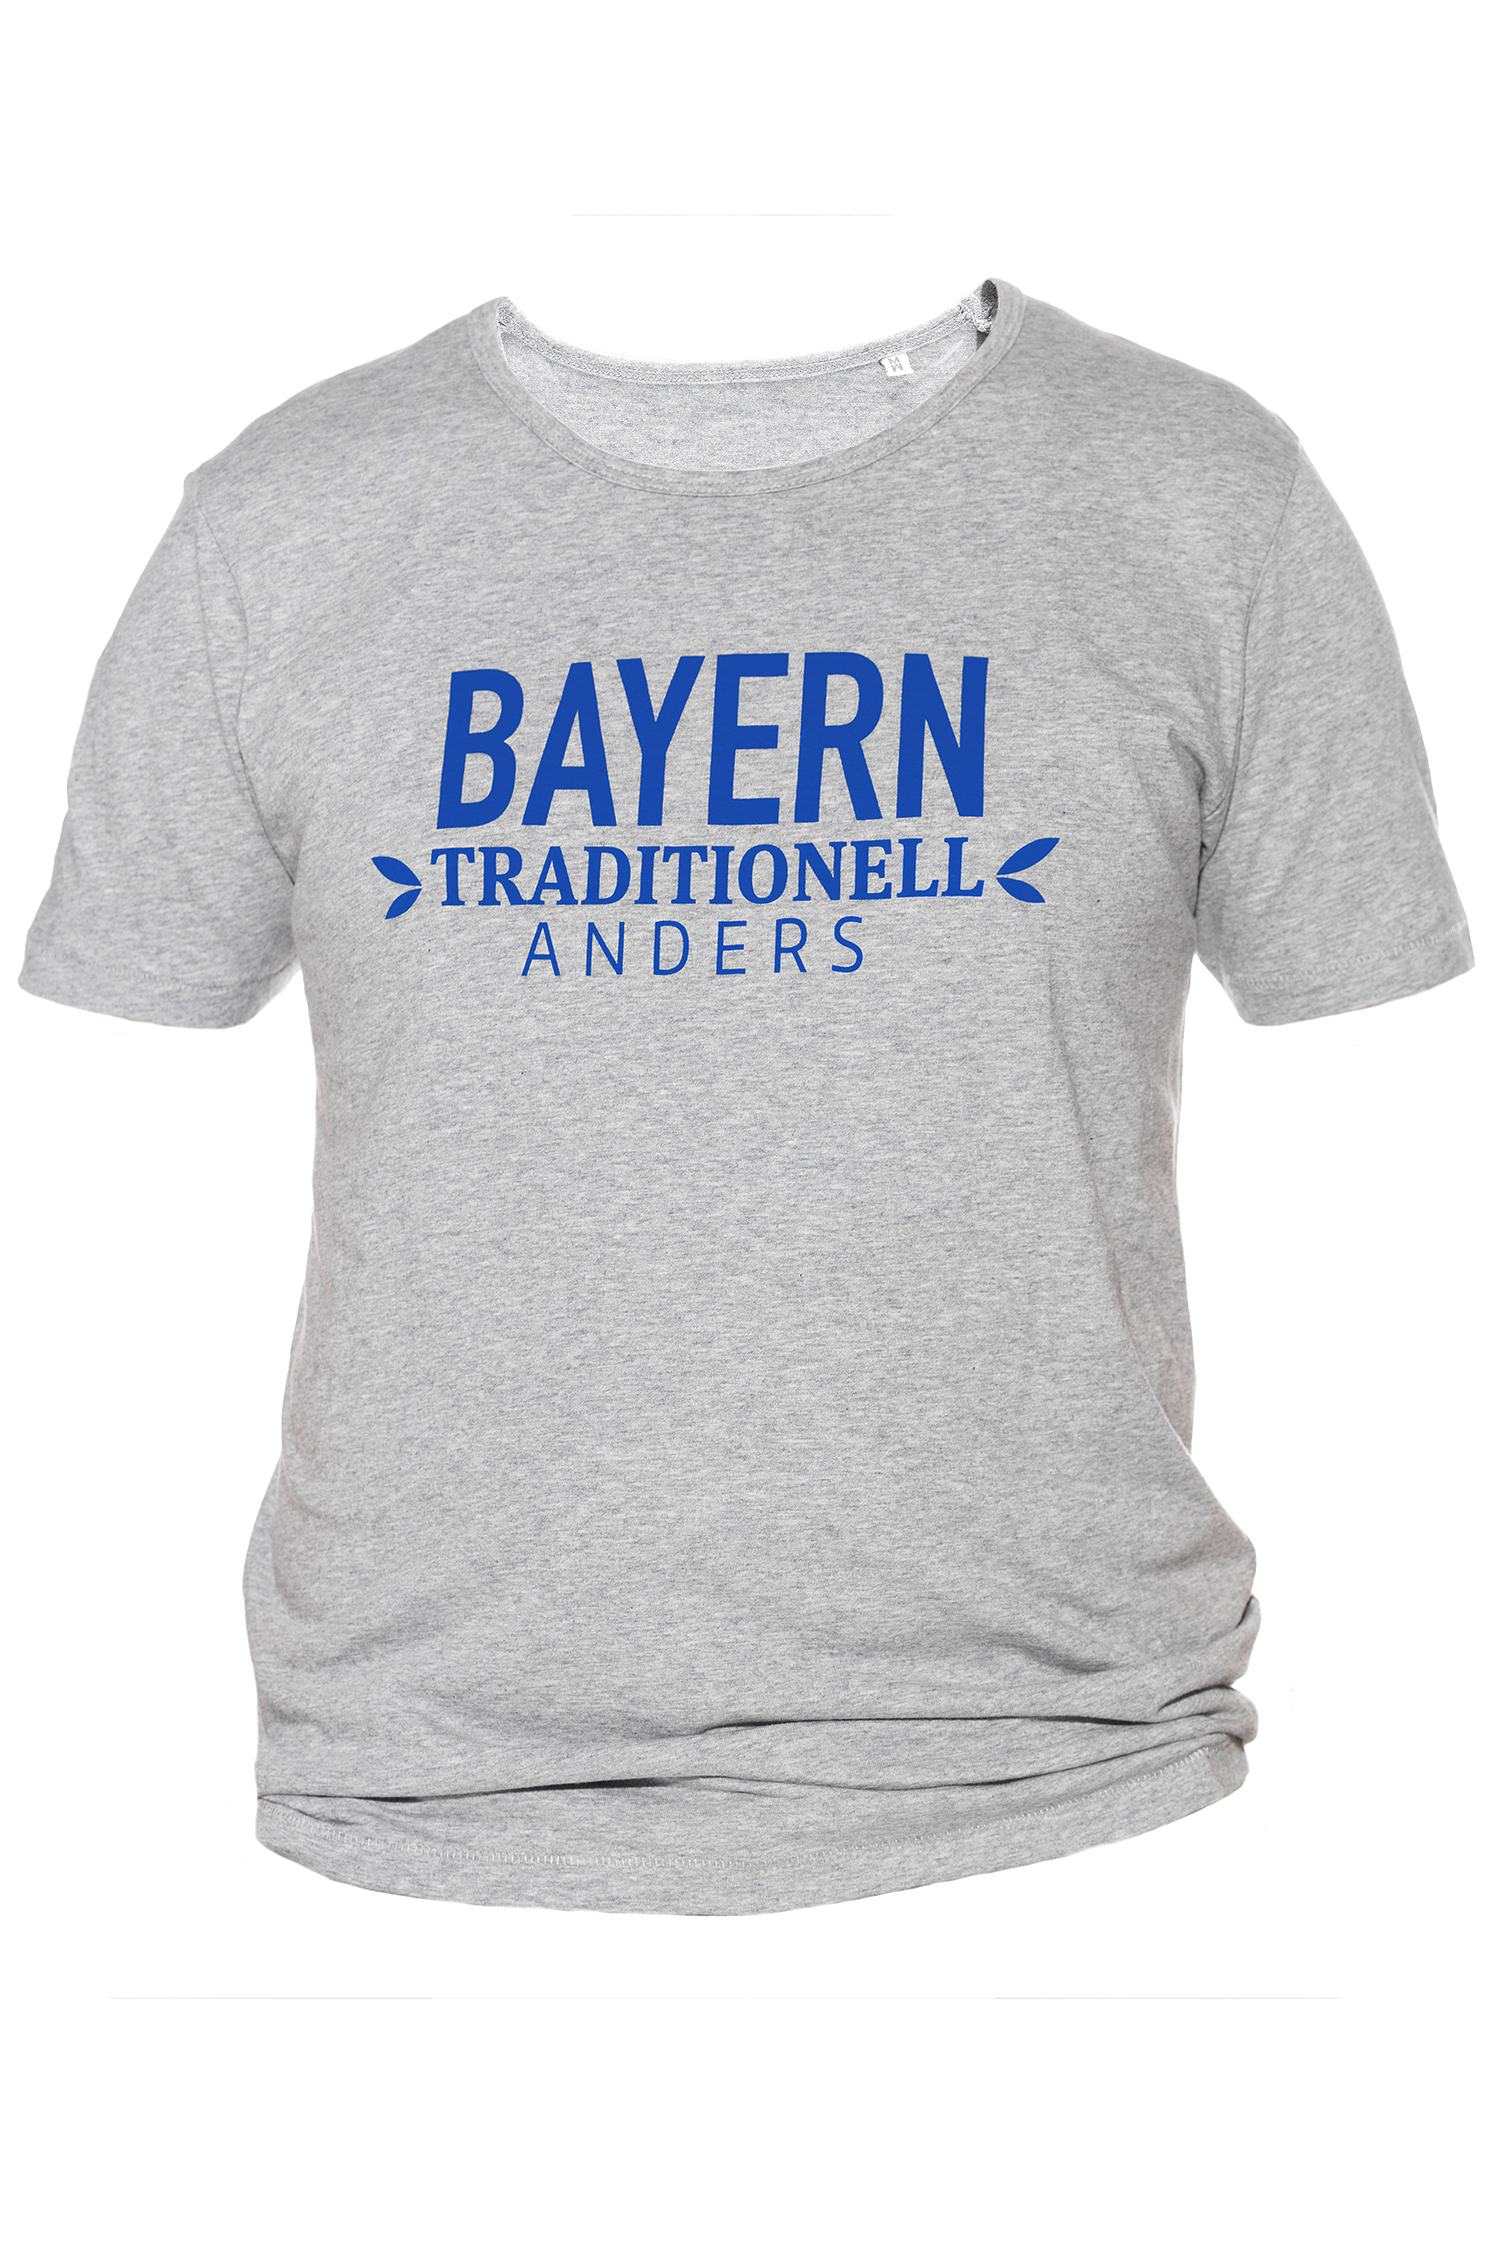 T-Shirt Bayern traditionell anders L | grau / blau